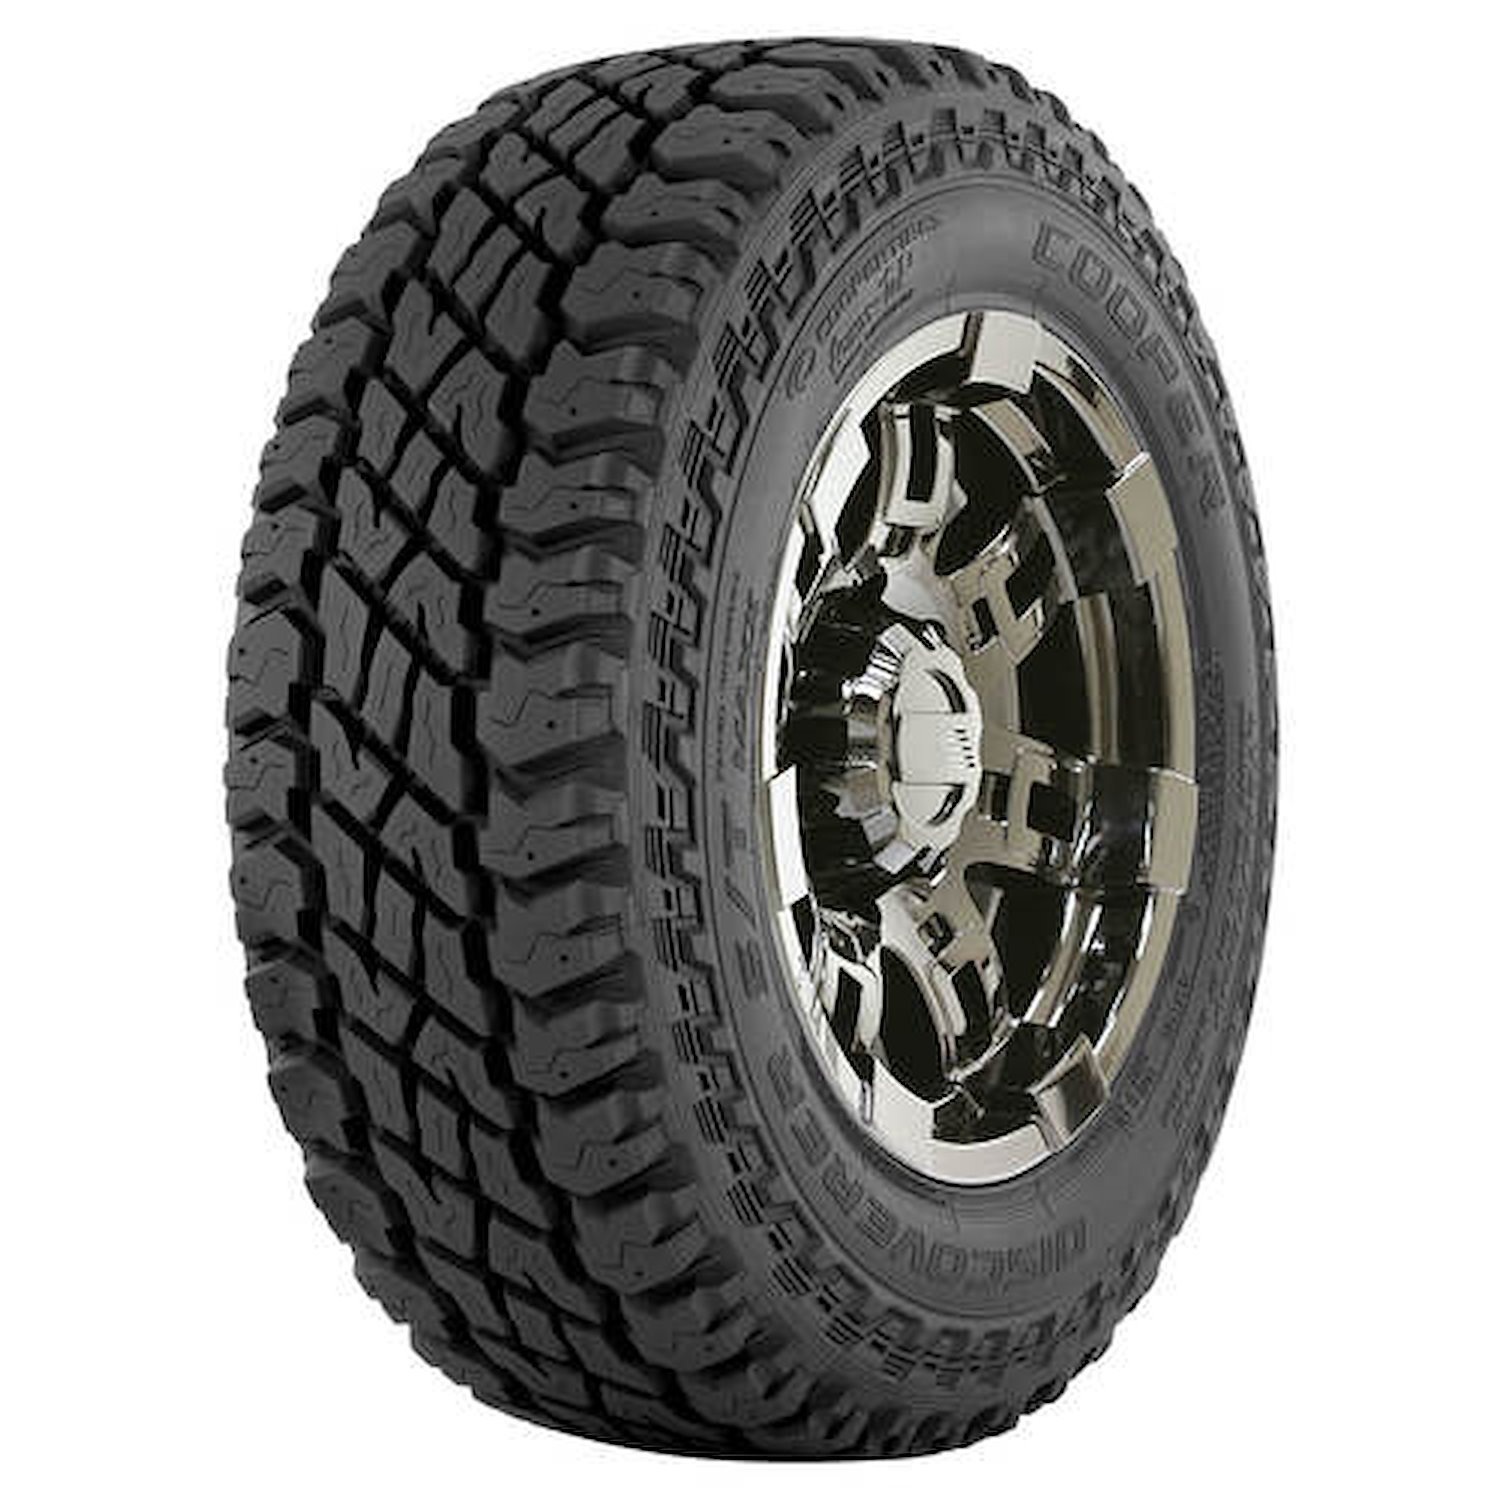 Discoverer S/T Maxx All-Terrain Tire, LT265/65R18